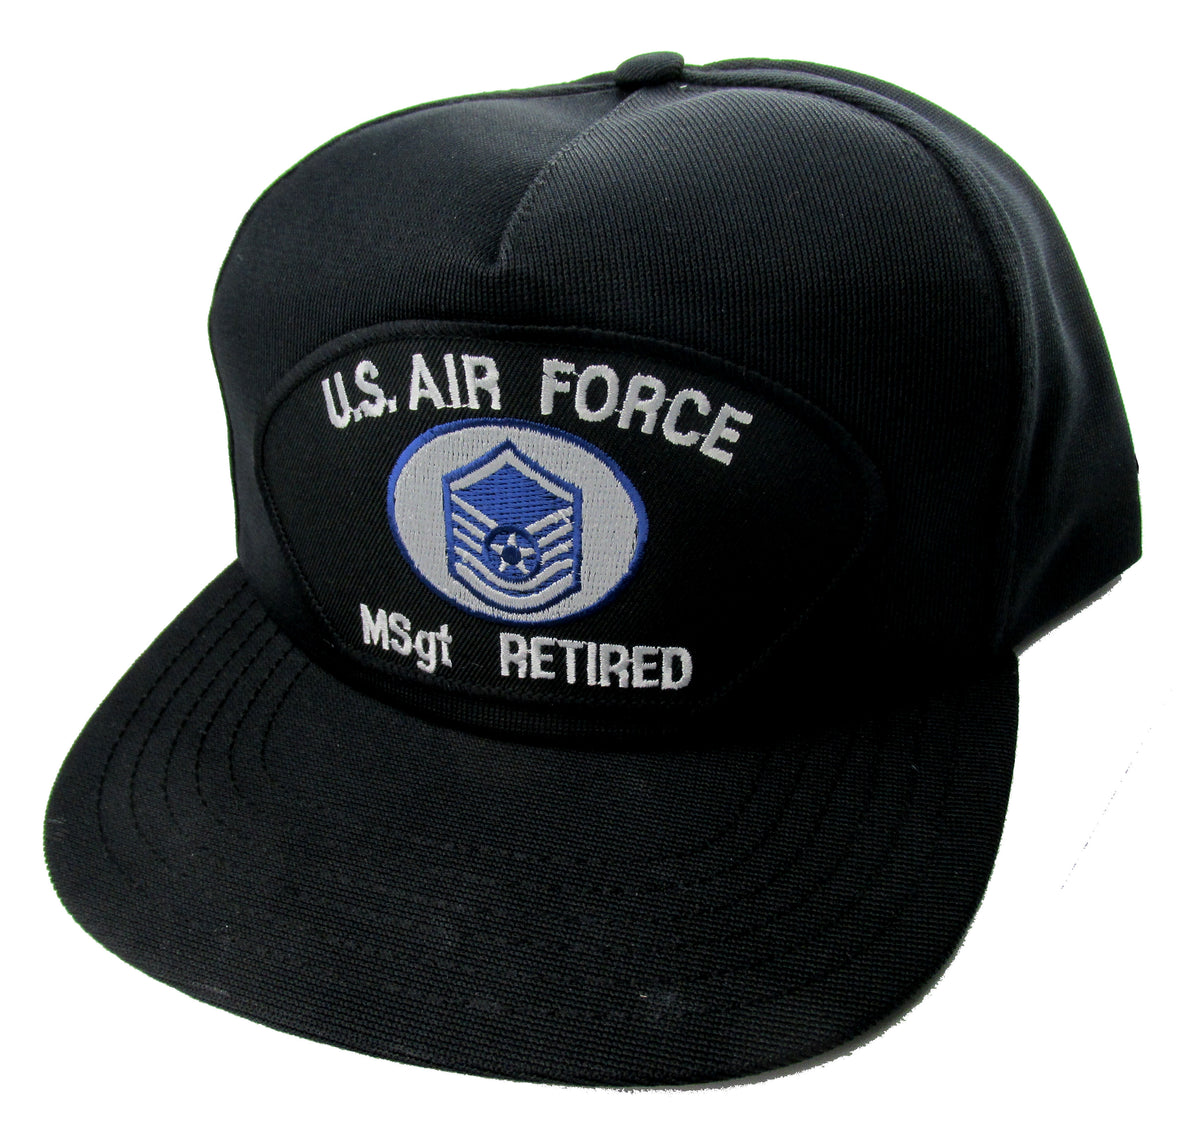 U.S. Air Force MSGT Retired Ball Cap